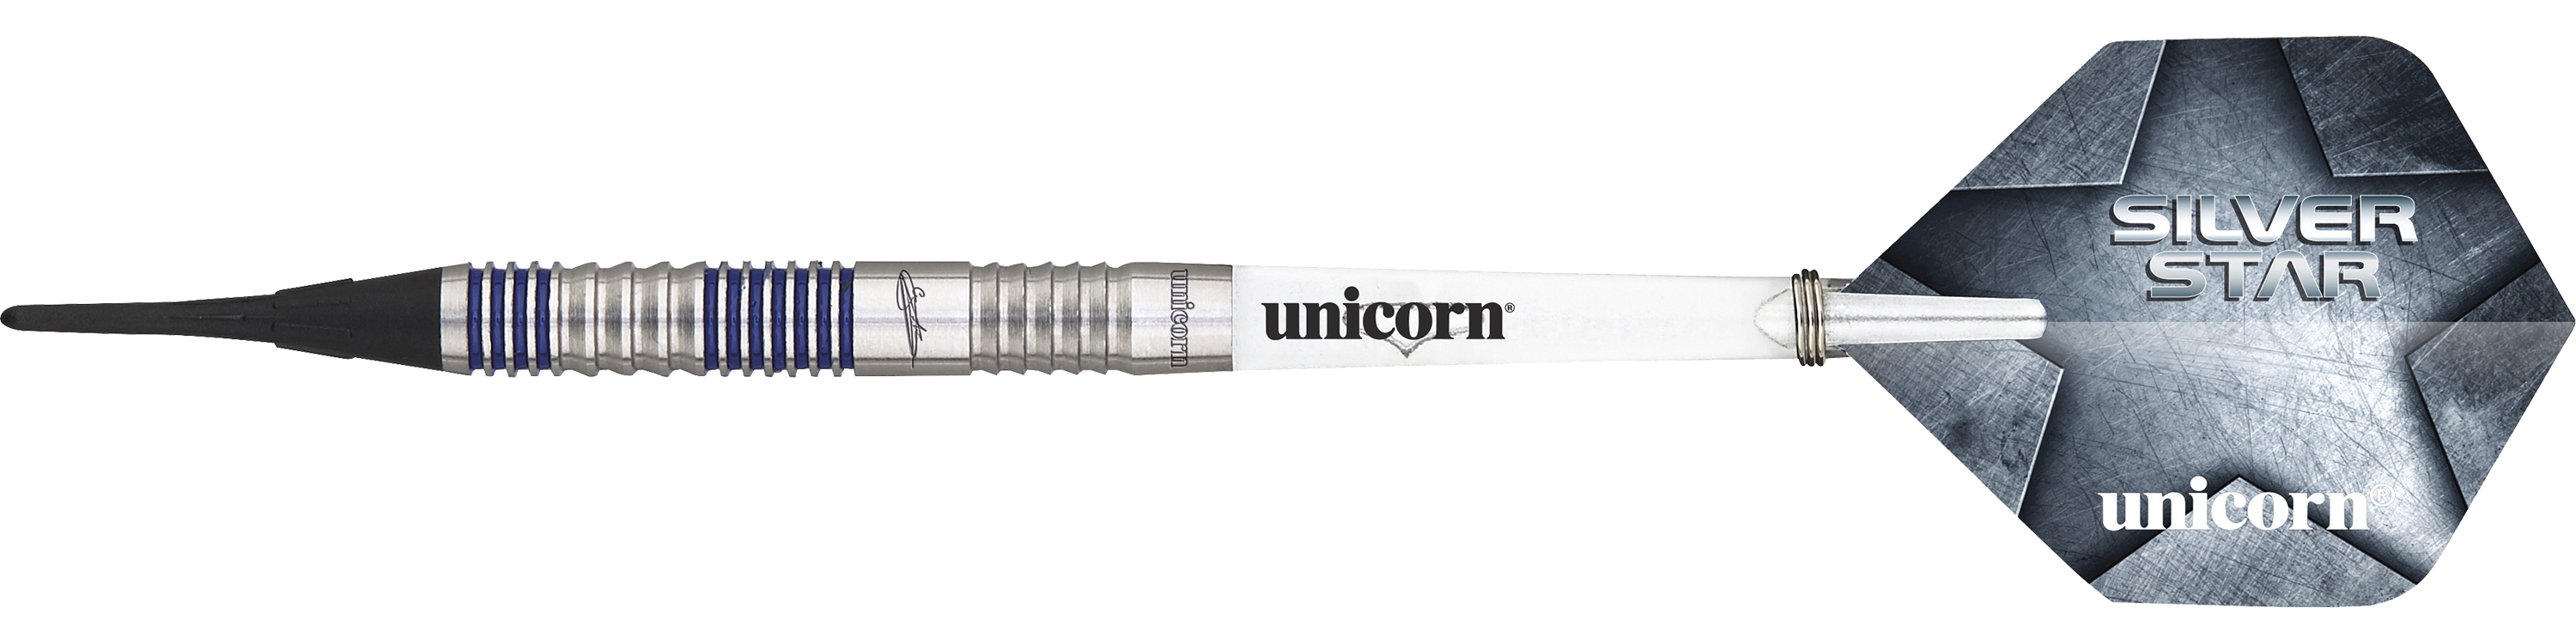 Unicorn Silver Star Var.1 Gary Anderson Softdarts